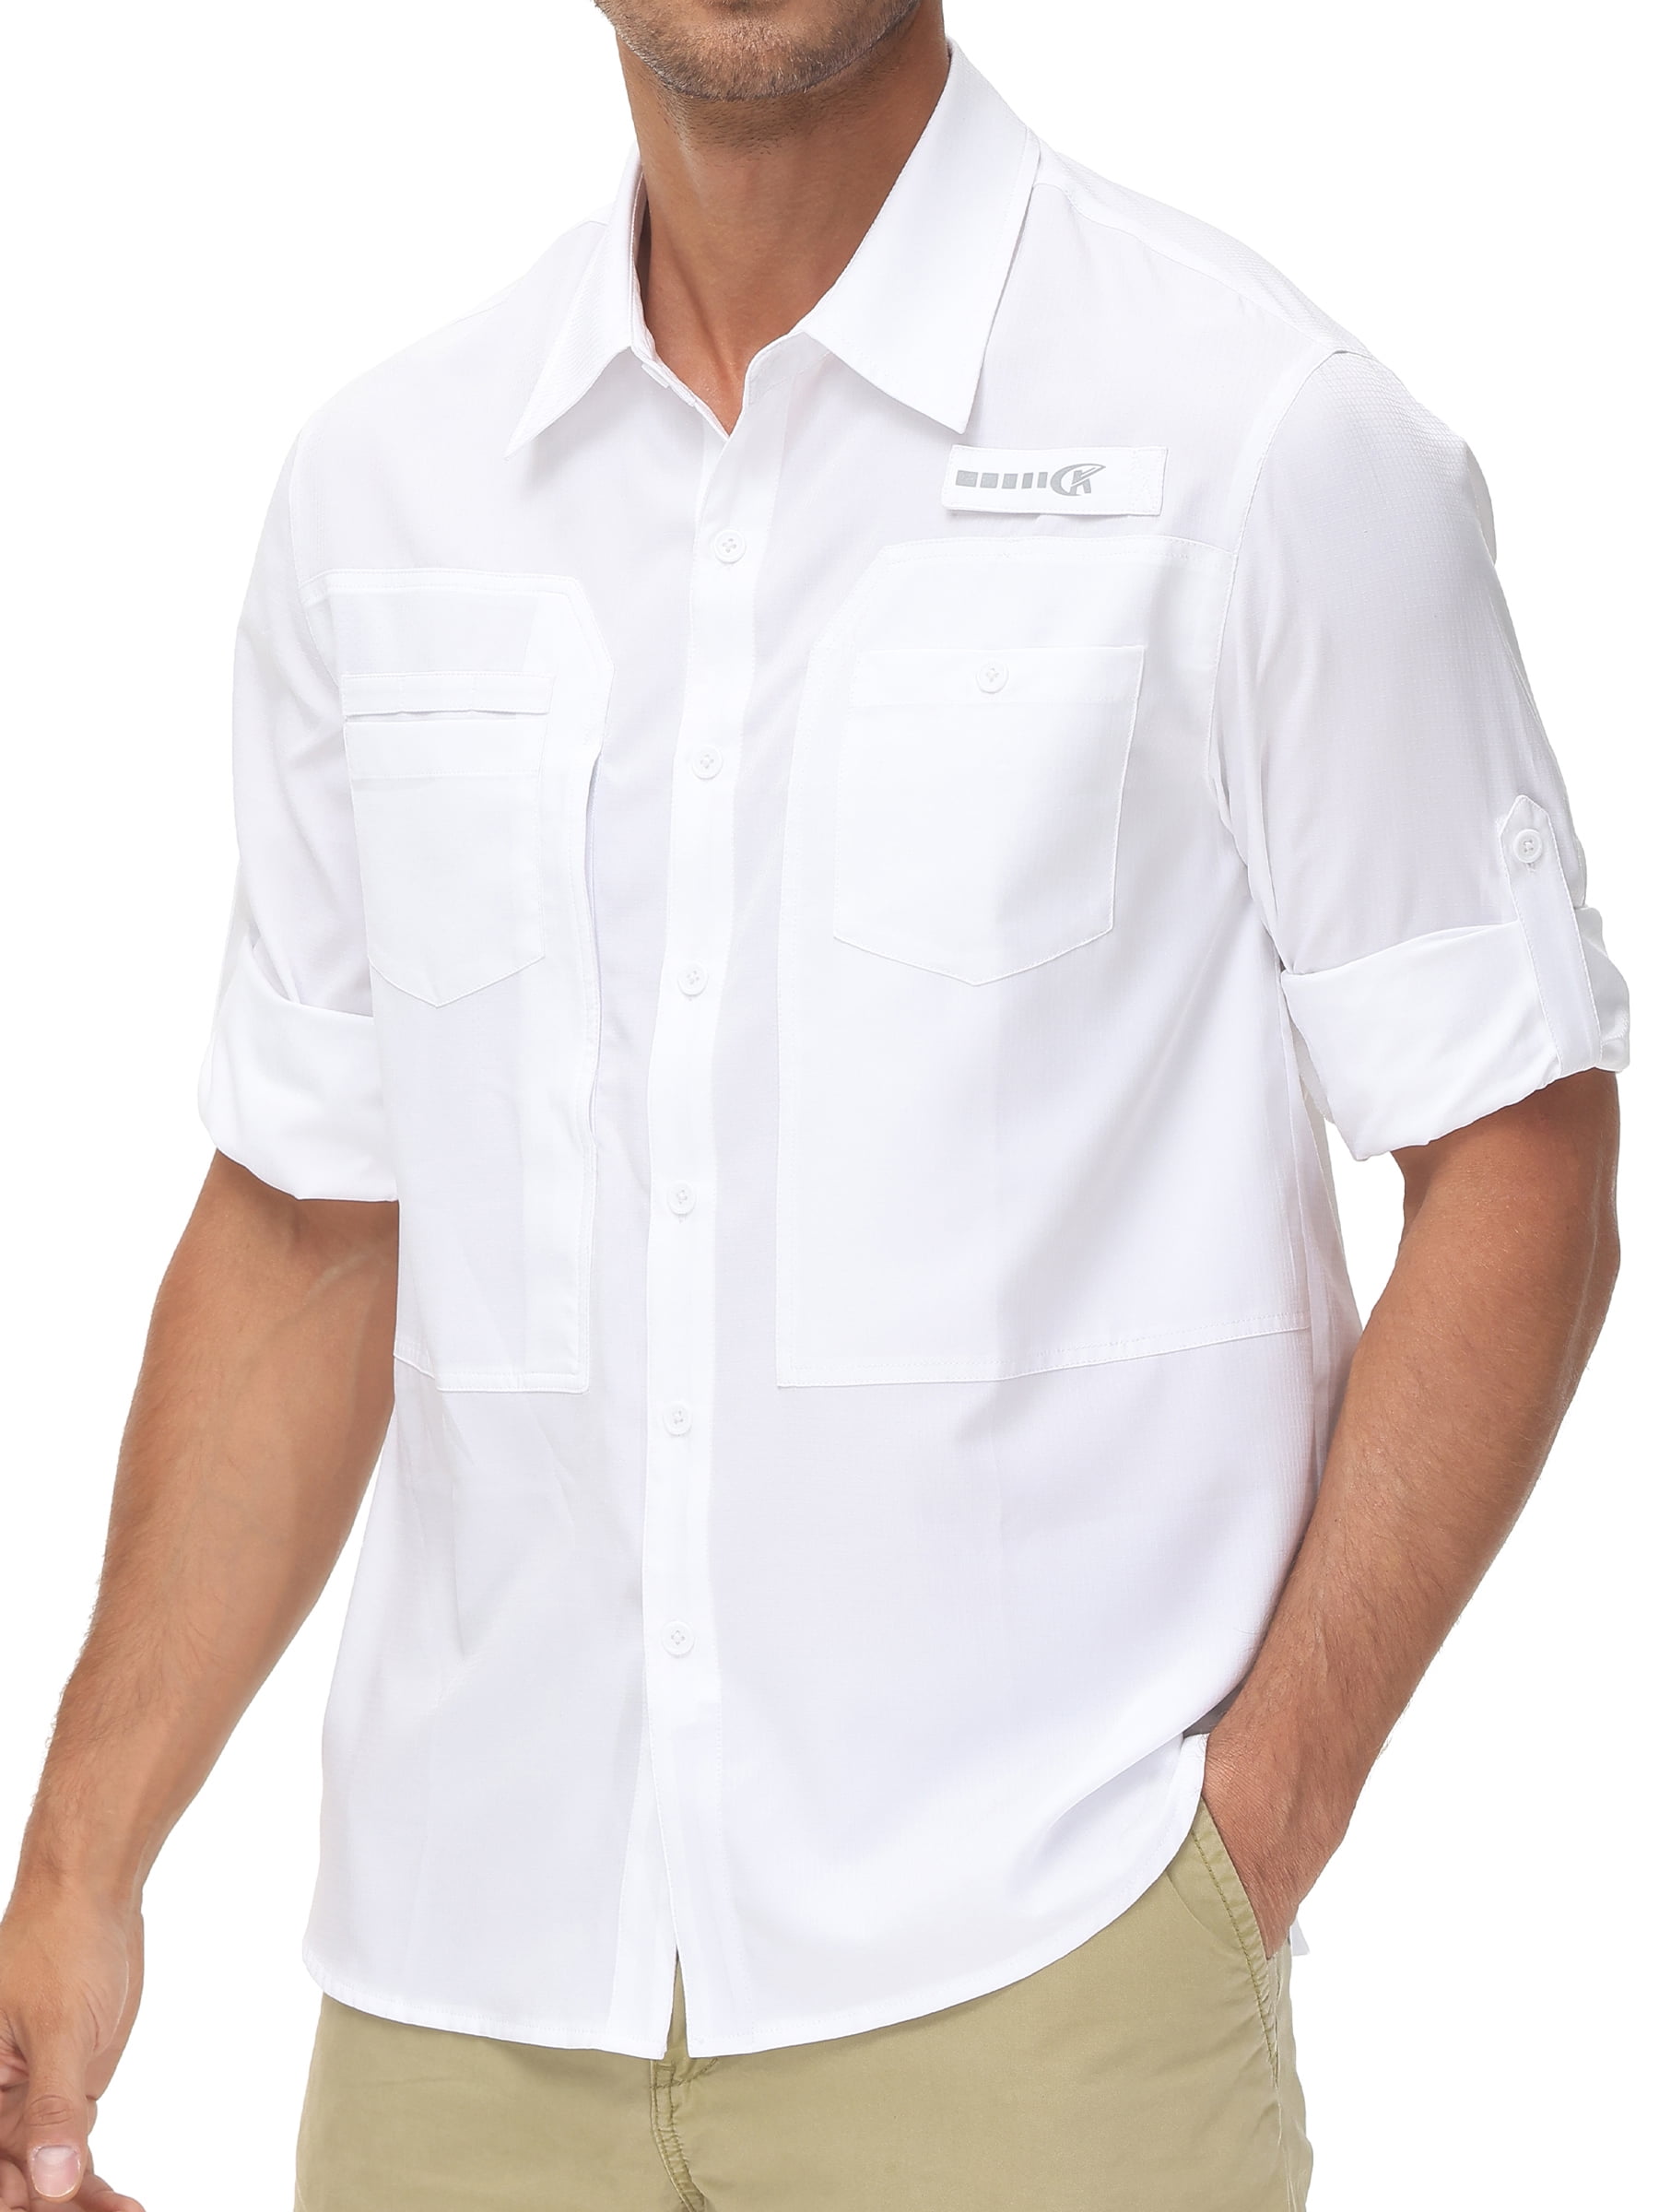 Pdbokew Men's Sun Protection Fishing Shirts Long Sleeve Travel Work Shirts  for Men UPF50+ Button Down Shirts with Zipper Pockets White M